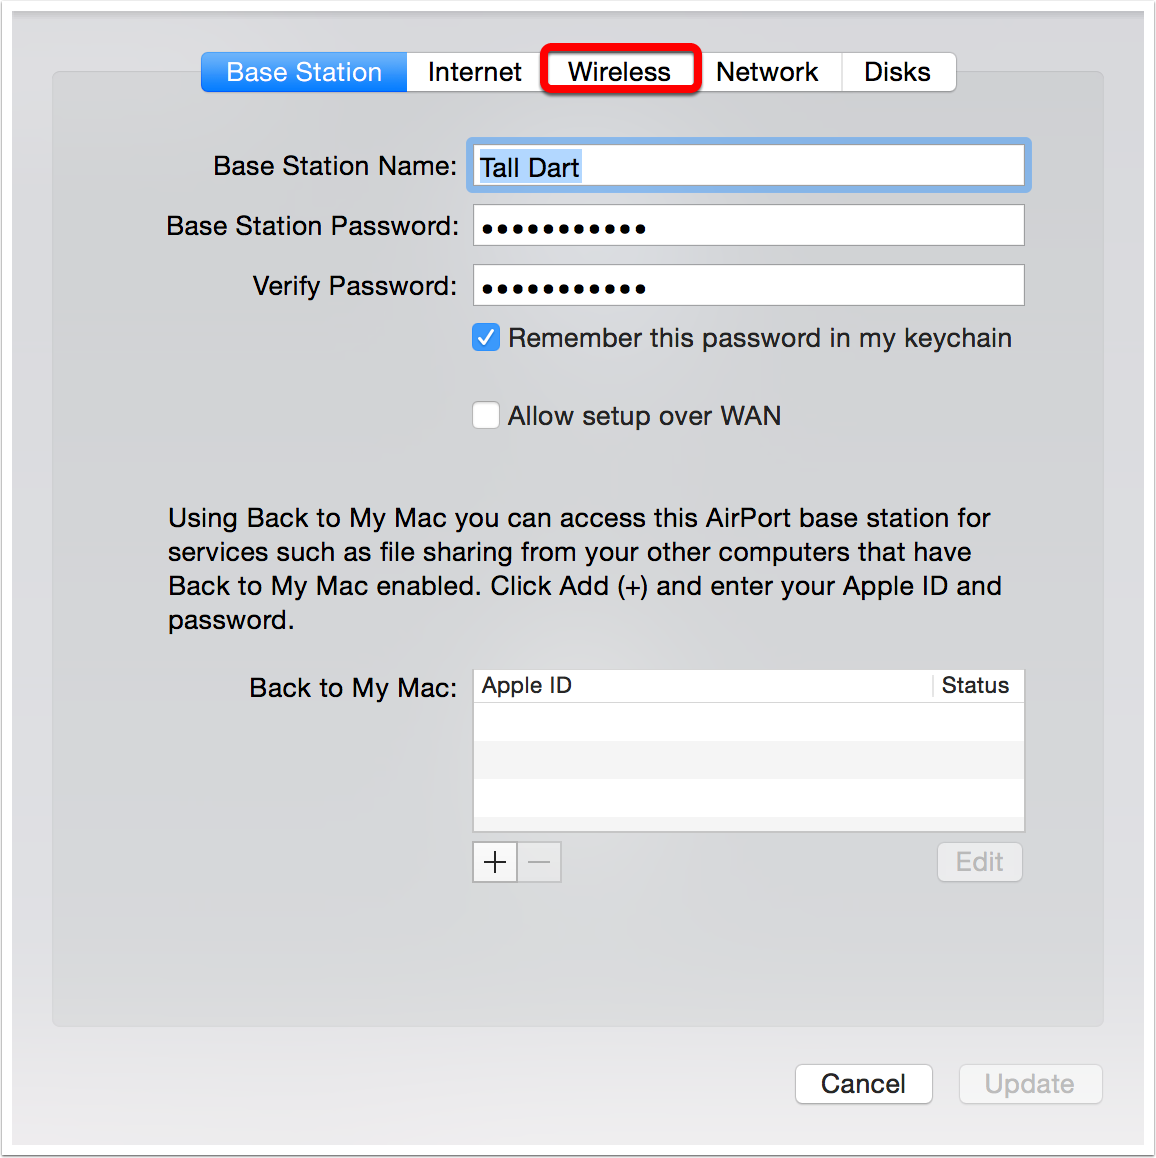 apple airport utility windows wont recognize router